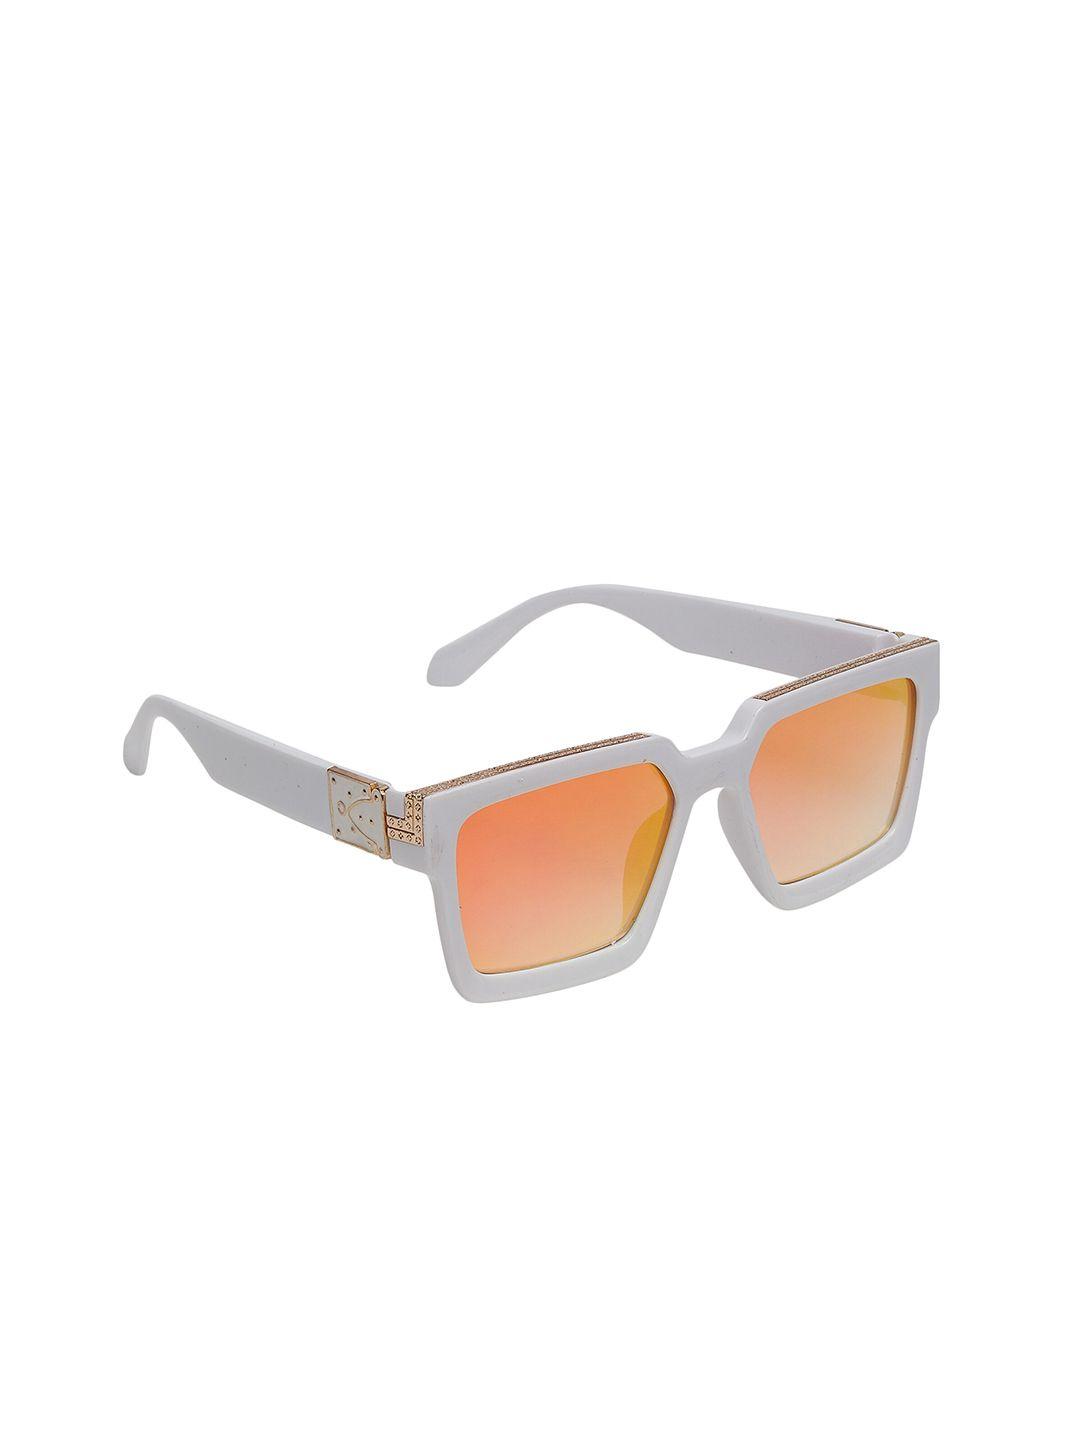 celebrity sunglasses unisex orange lens & white wayfarer sunglasses with uv protected lens